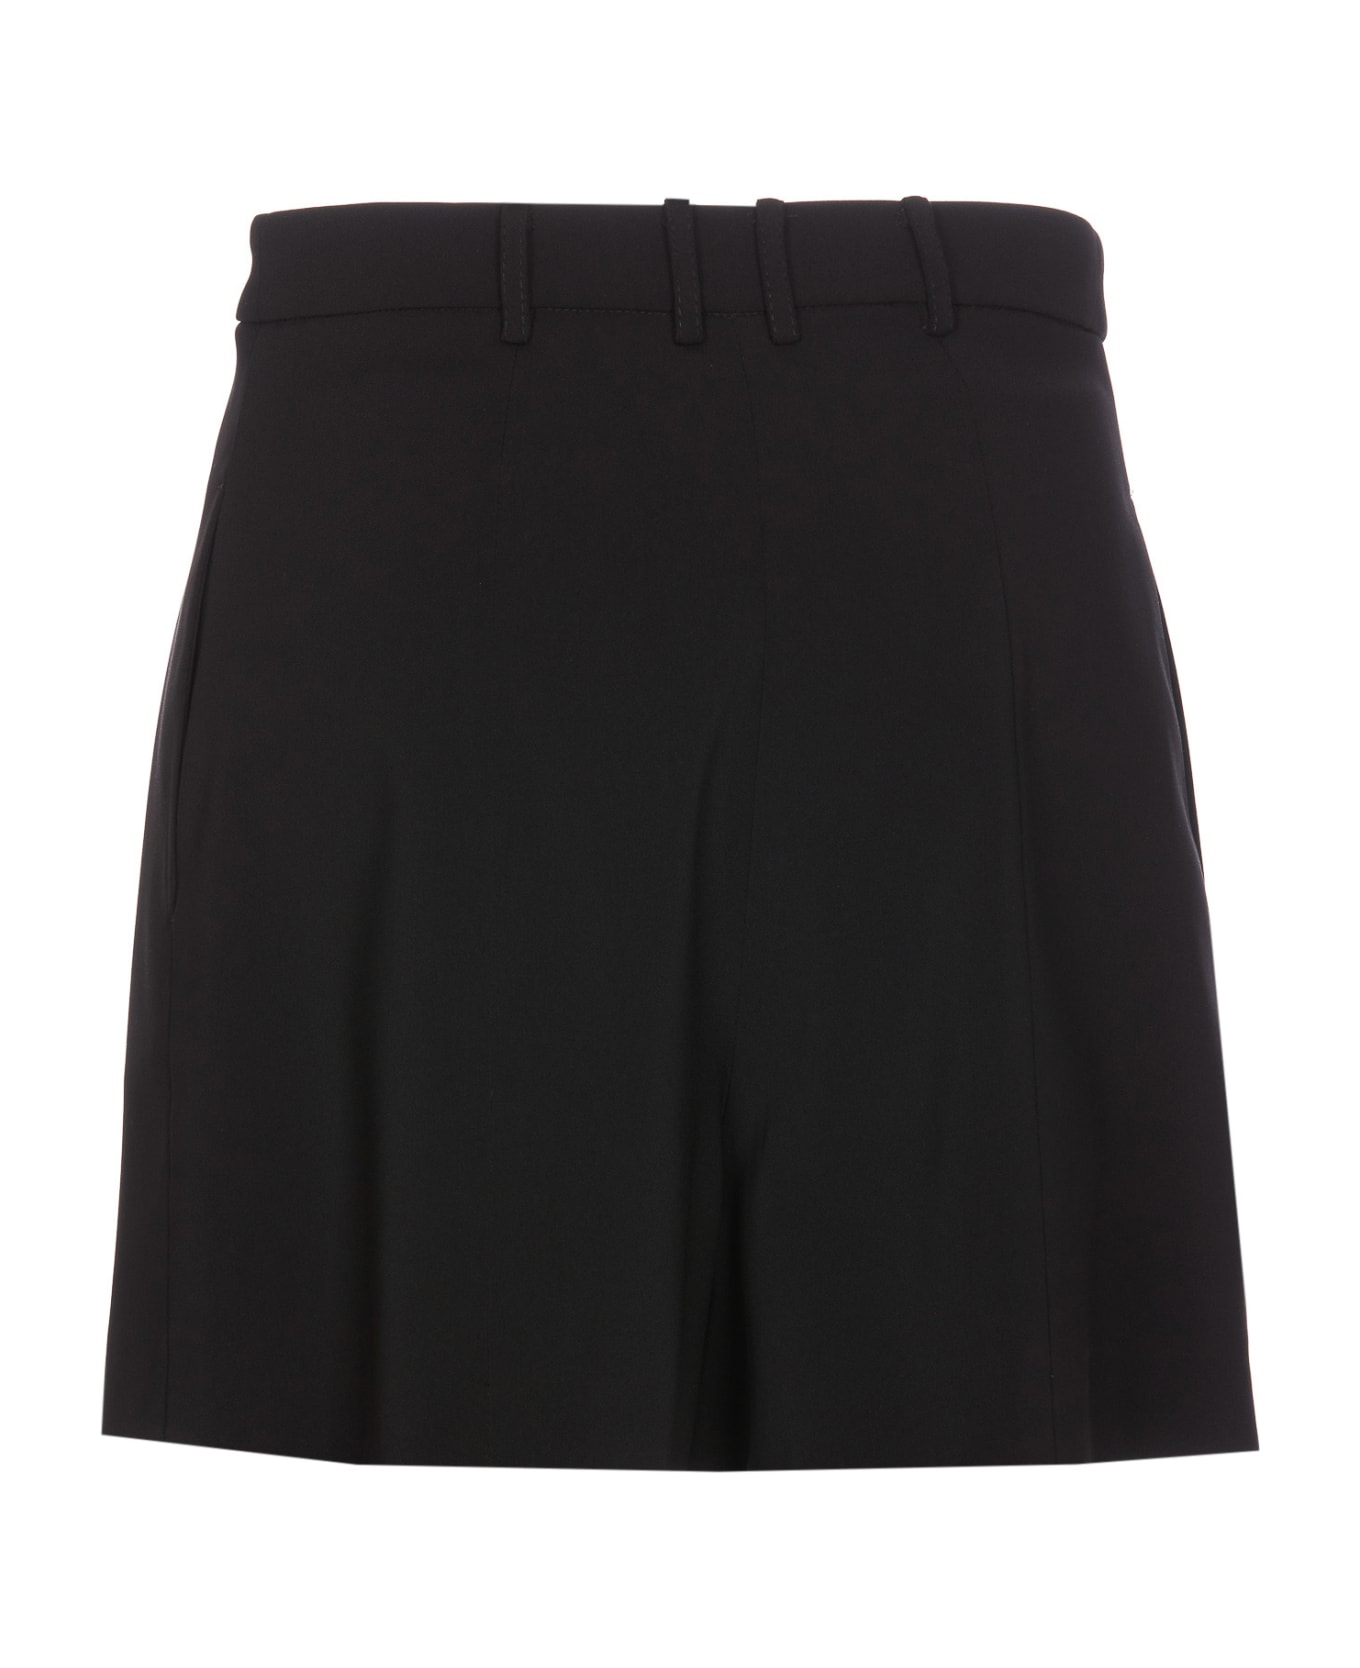 Patrizia Pepe Essential Shorts - Black